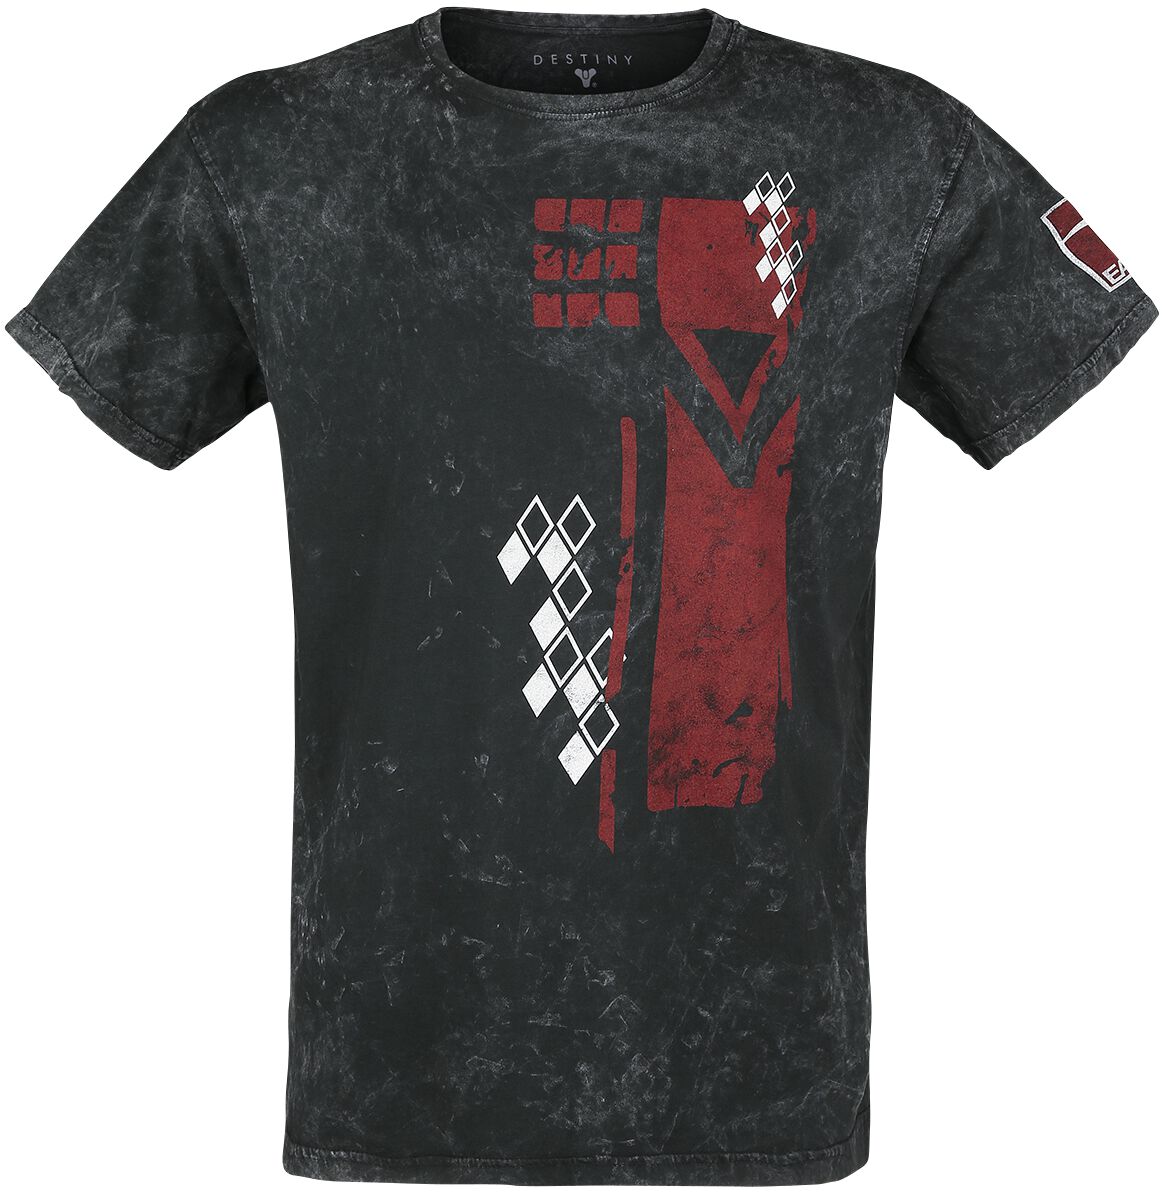 destiny - gaming t-shirt - 2 - cayde-6 - s bis 3xl - fÃ¼r mÃ¤nner - grÃ¶ÃŸe m - - emp exklusives merchandise! schwarz